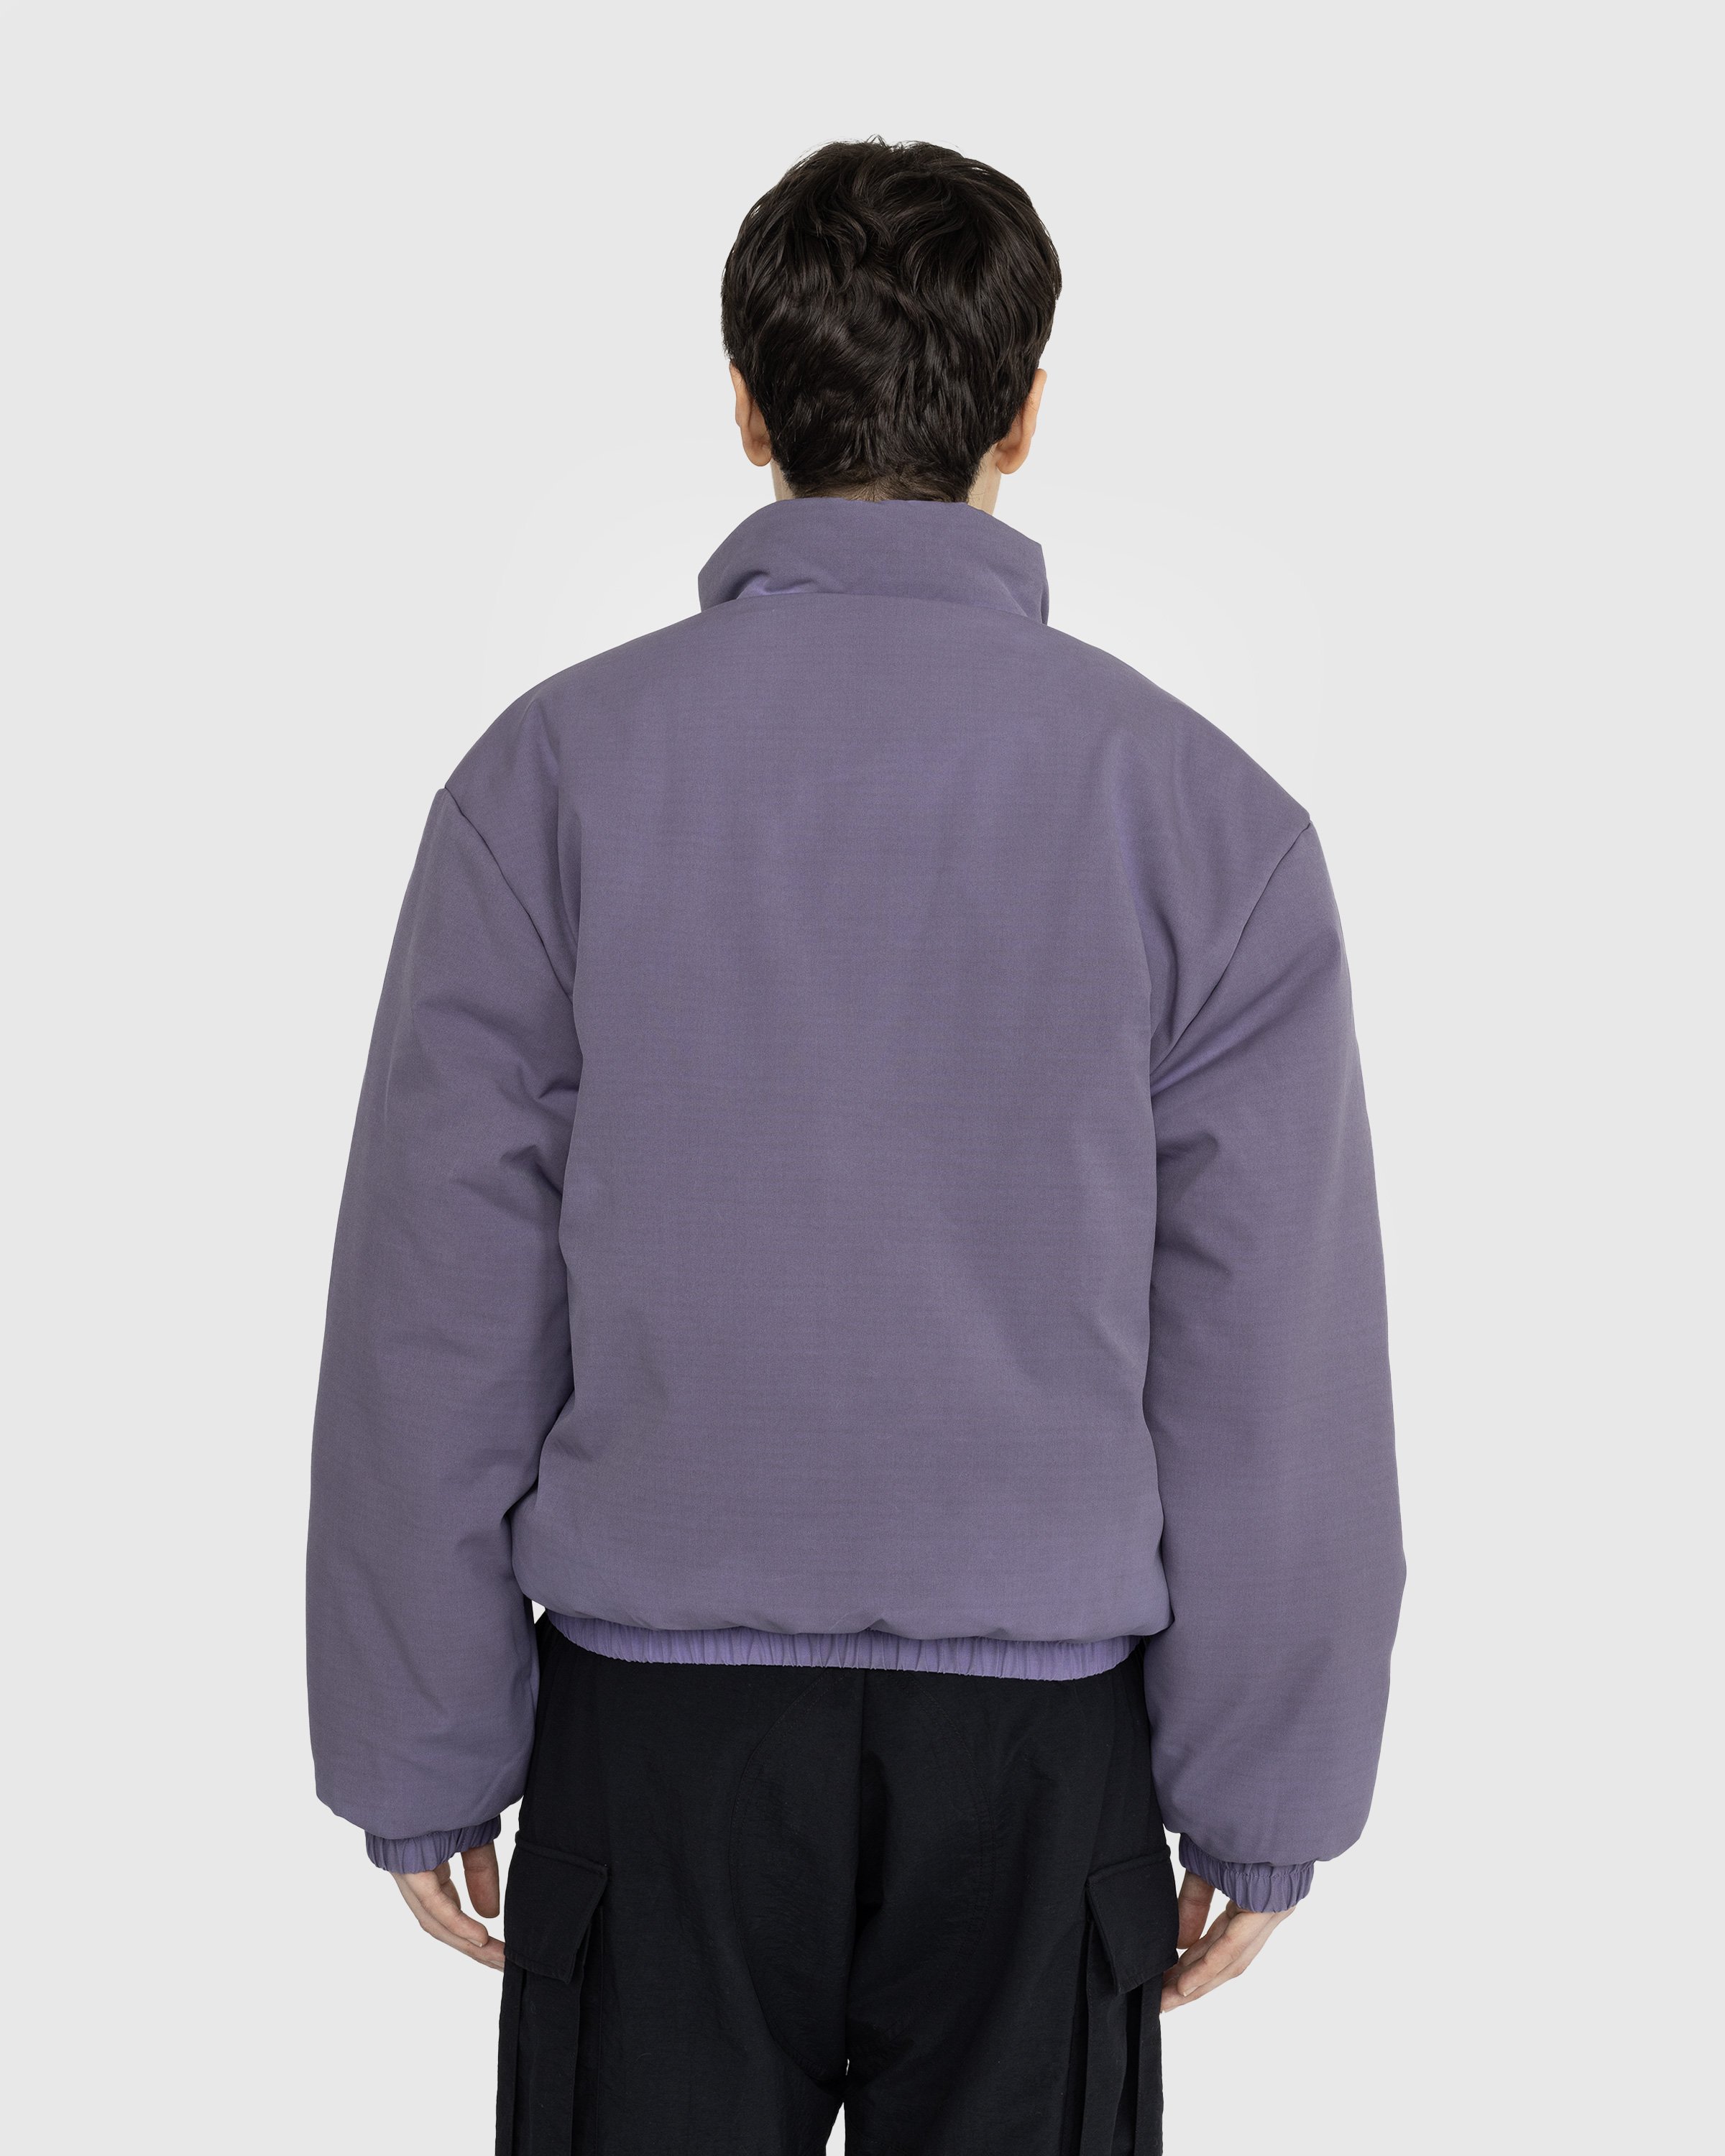 Acne Studios - Heat Reactive Jacket - Clothing - Purple - Image 3